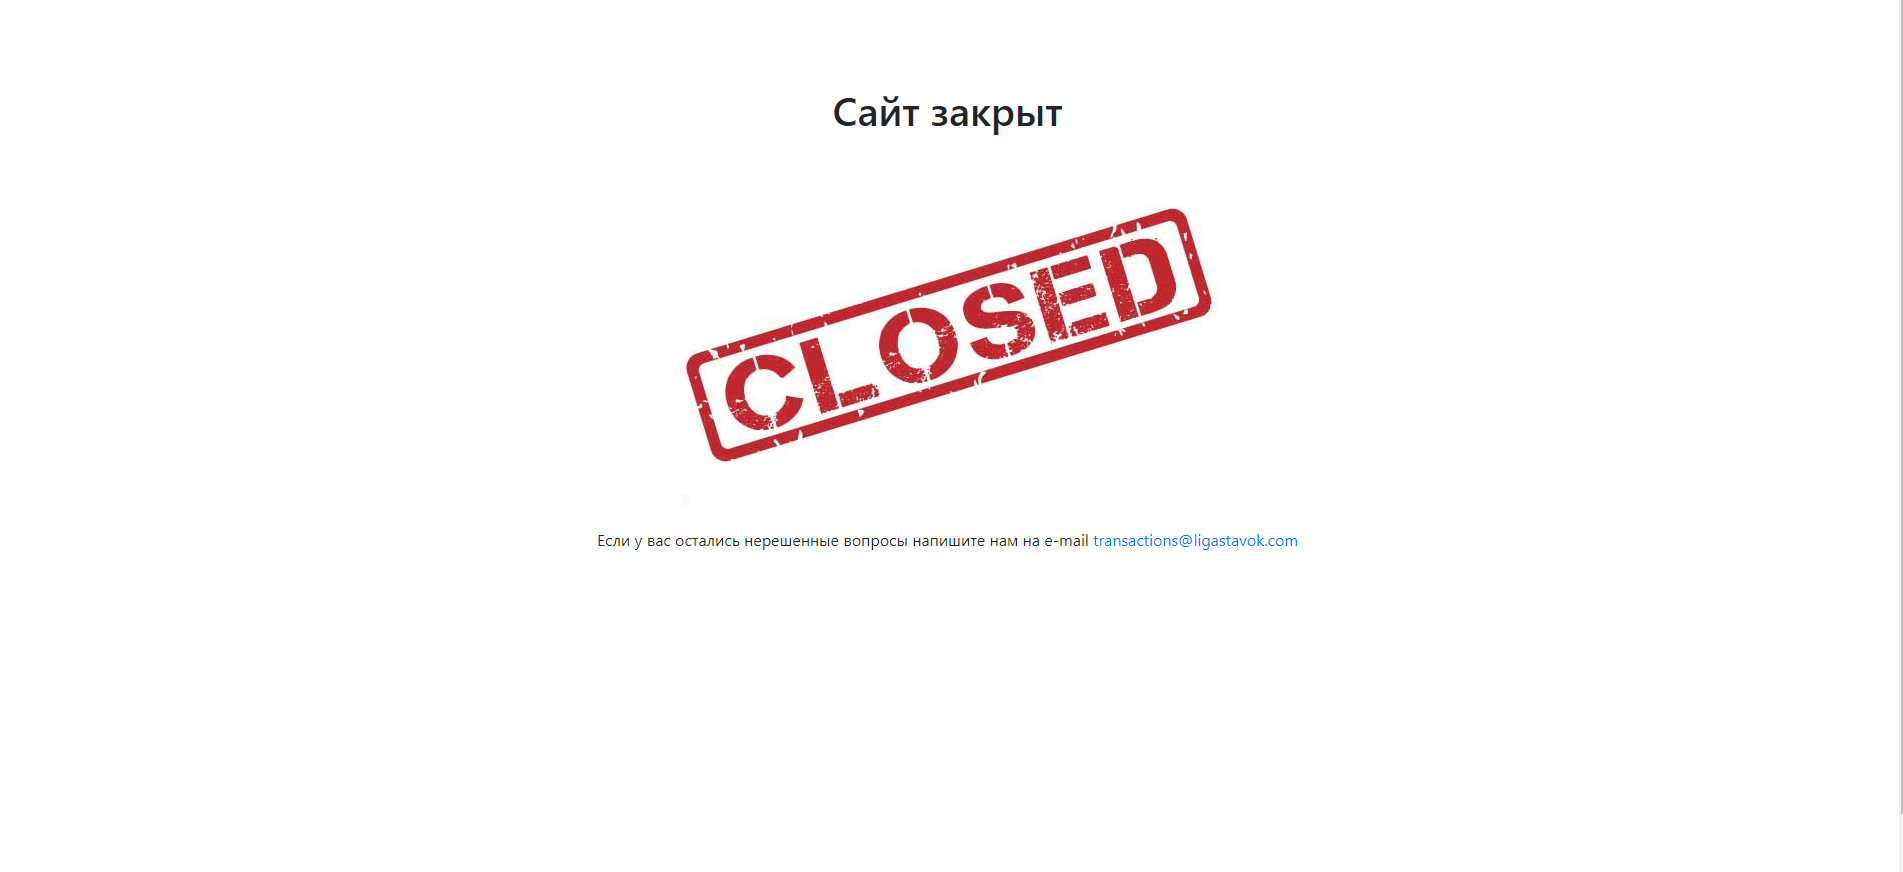 Сайт Ligastavok.com закрыт